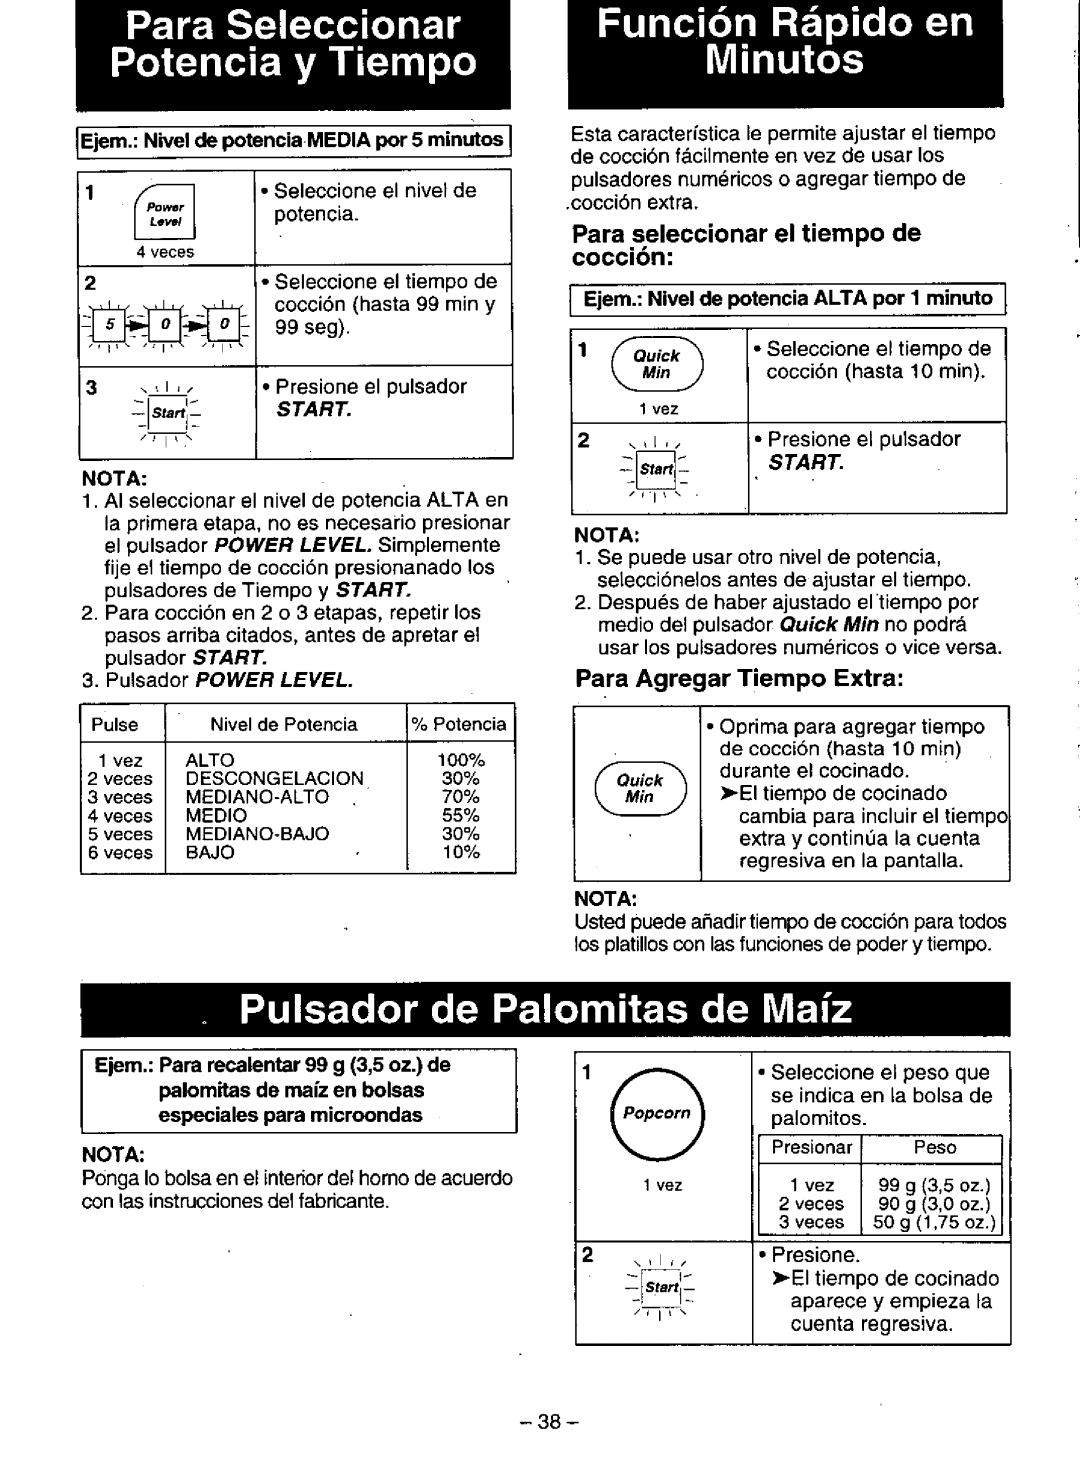 Panasonic NNS787 manual 